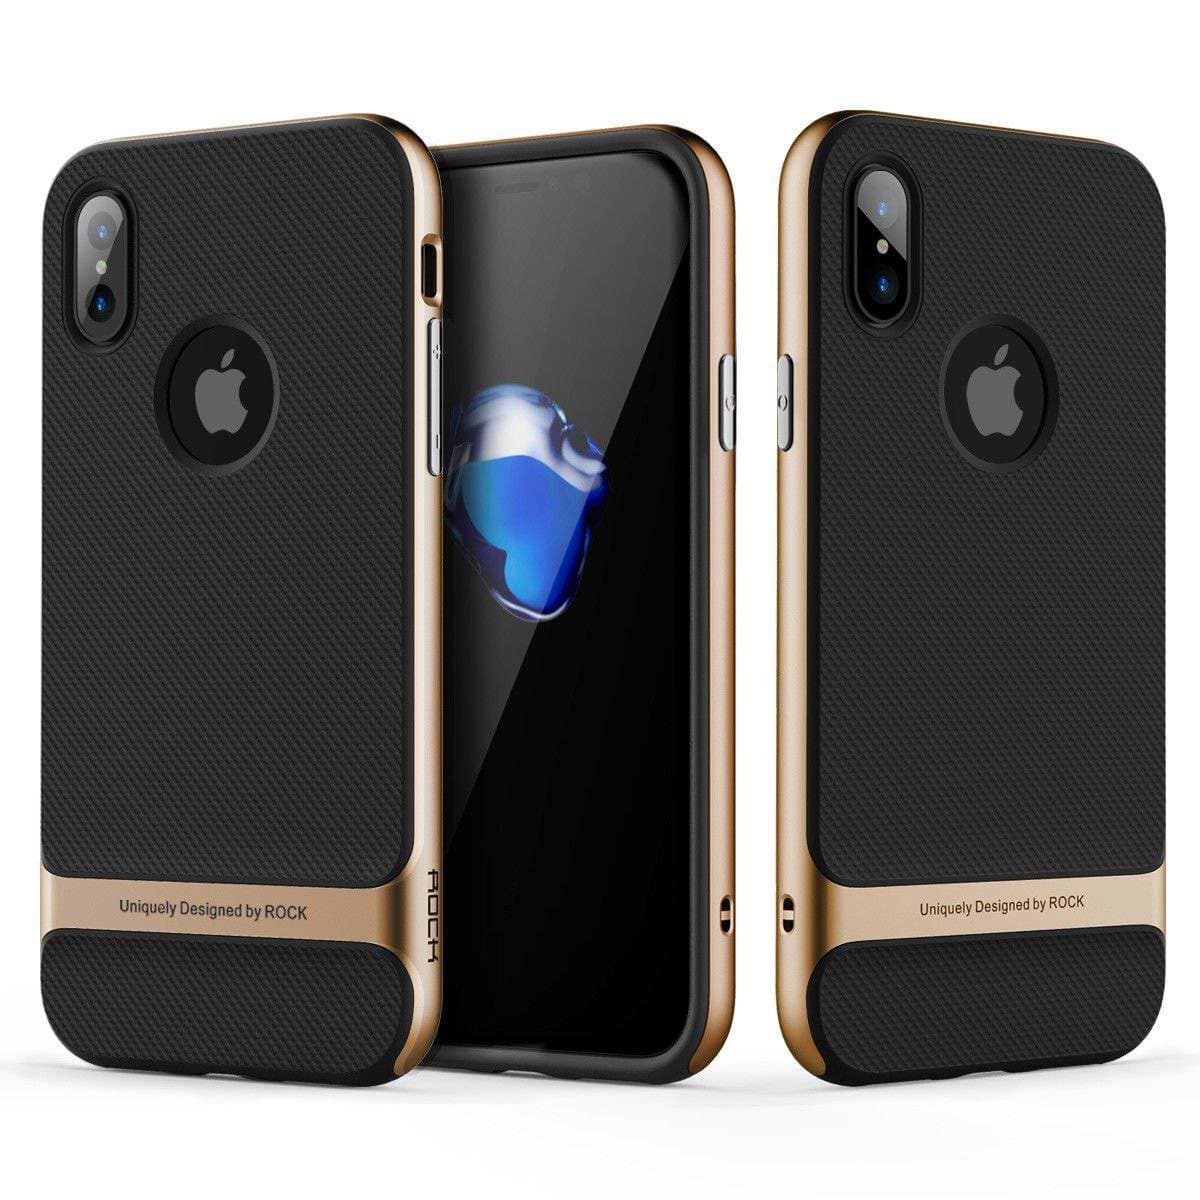 Heavy duty metallic bumper stylish protection iPhone Case - iiCase